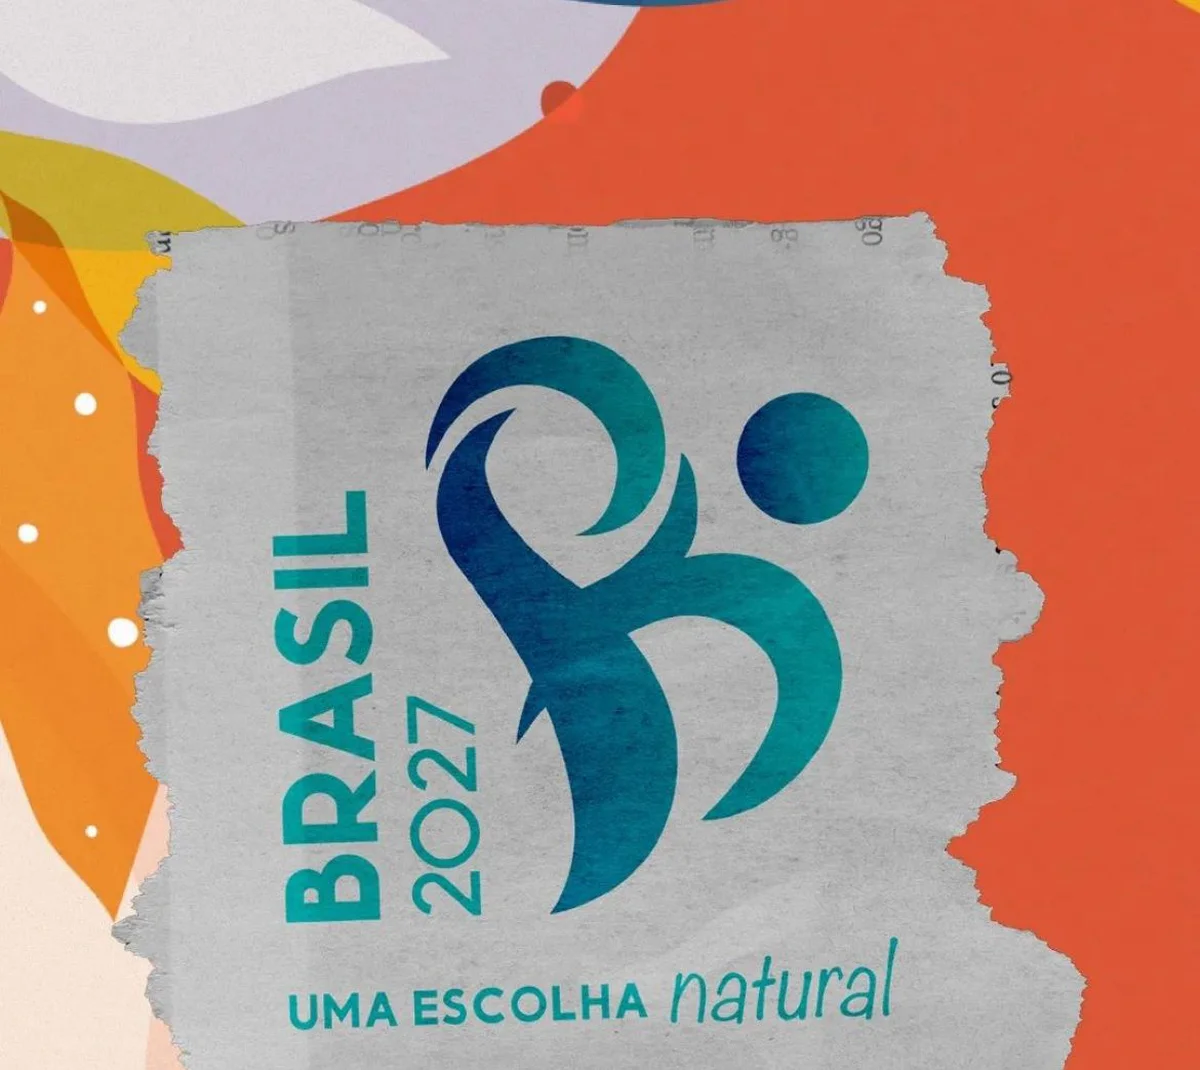 CBF oficializa candidatura do Brasil para sediar Copa feminina de